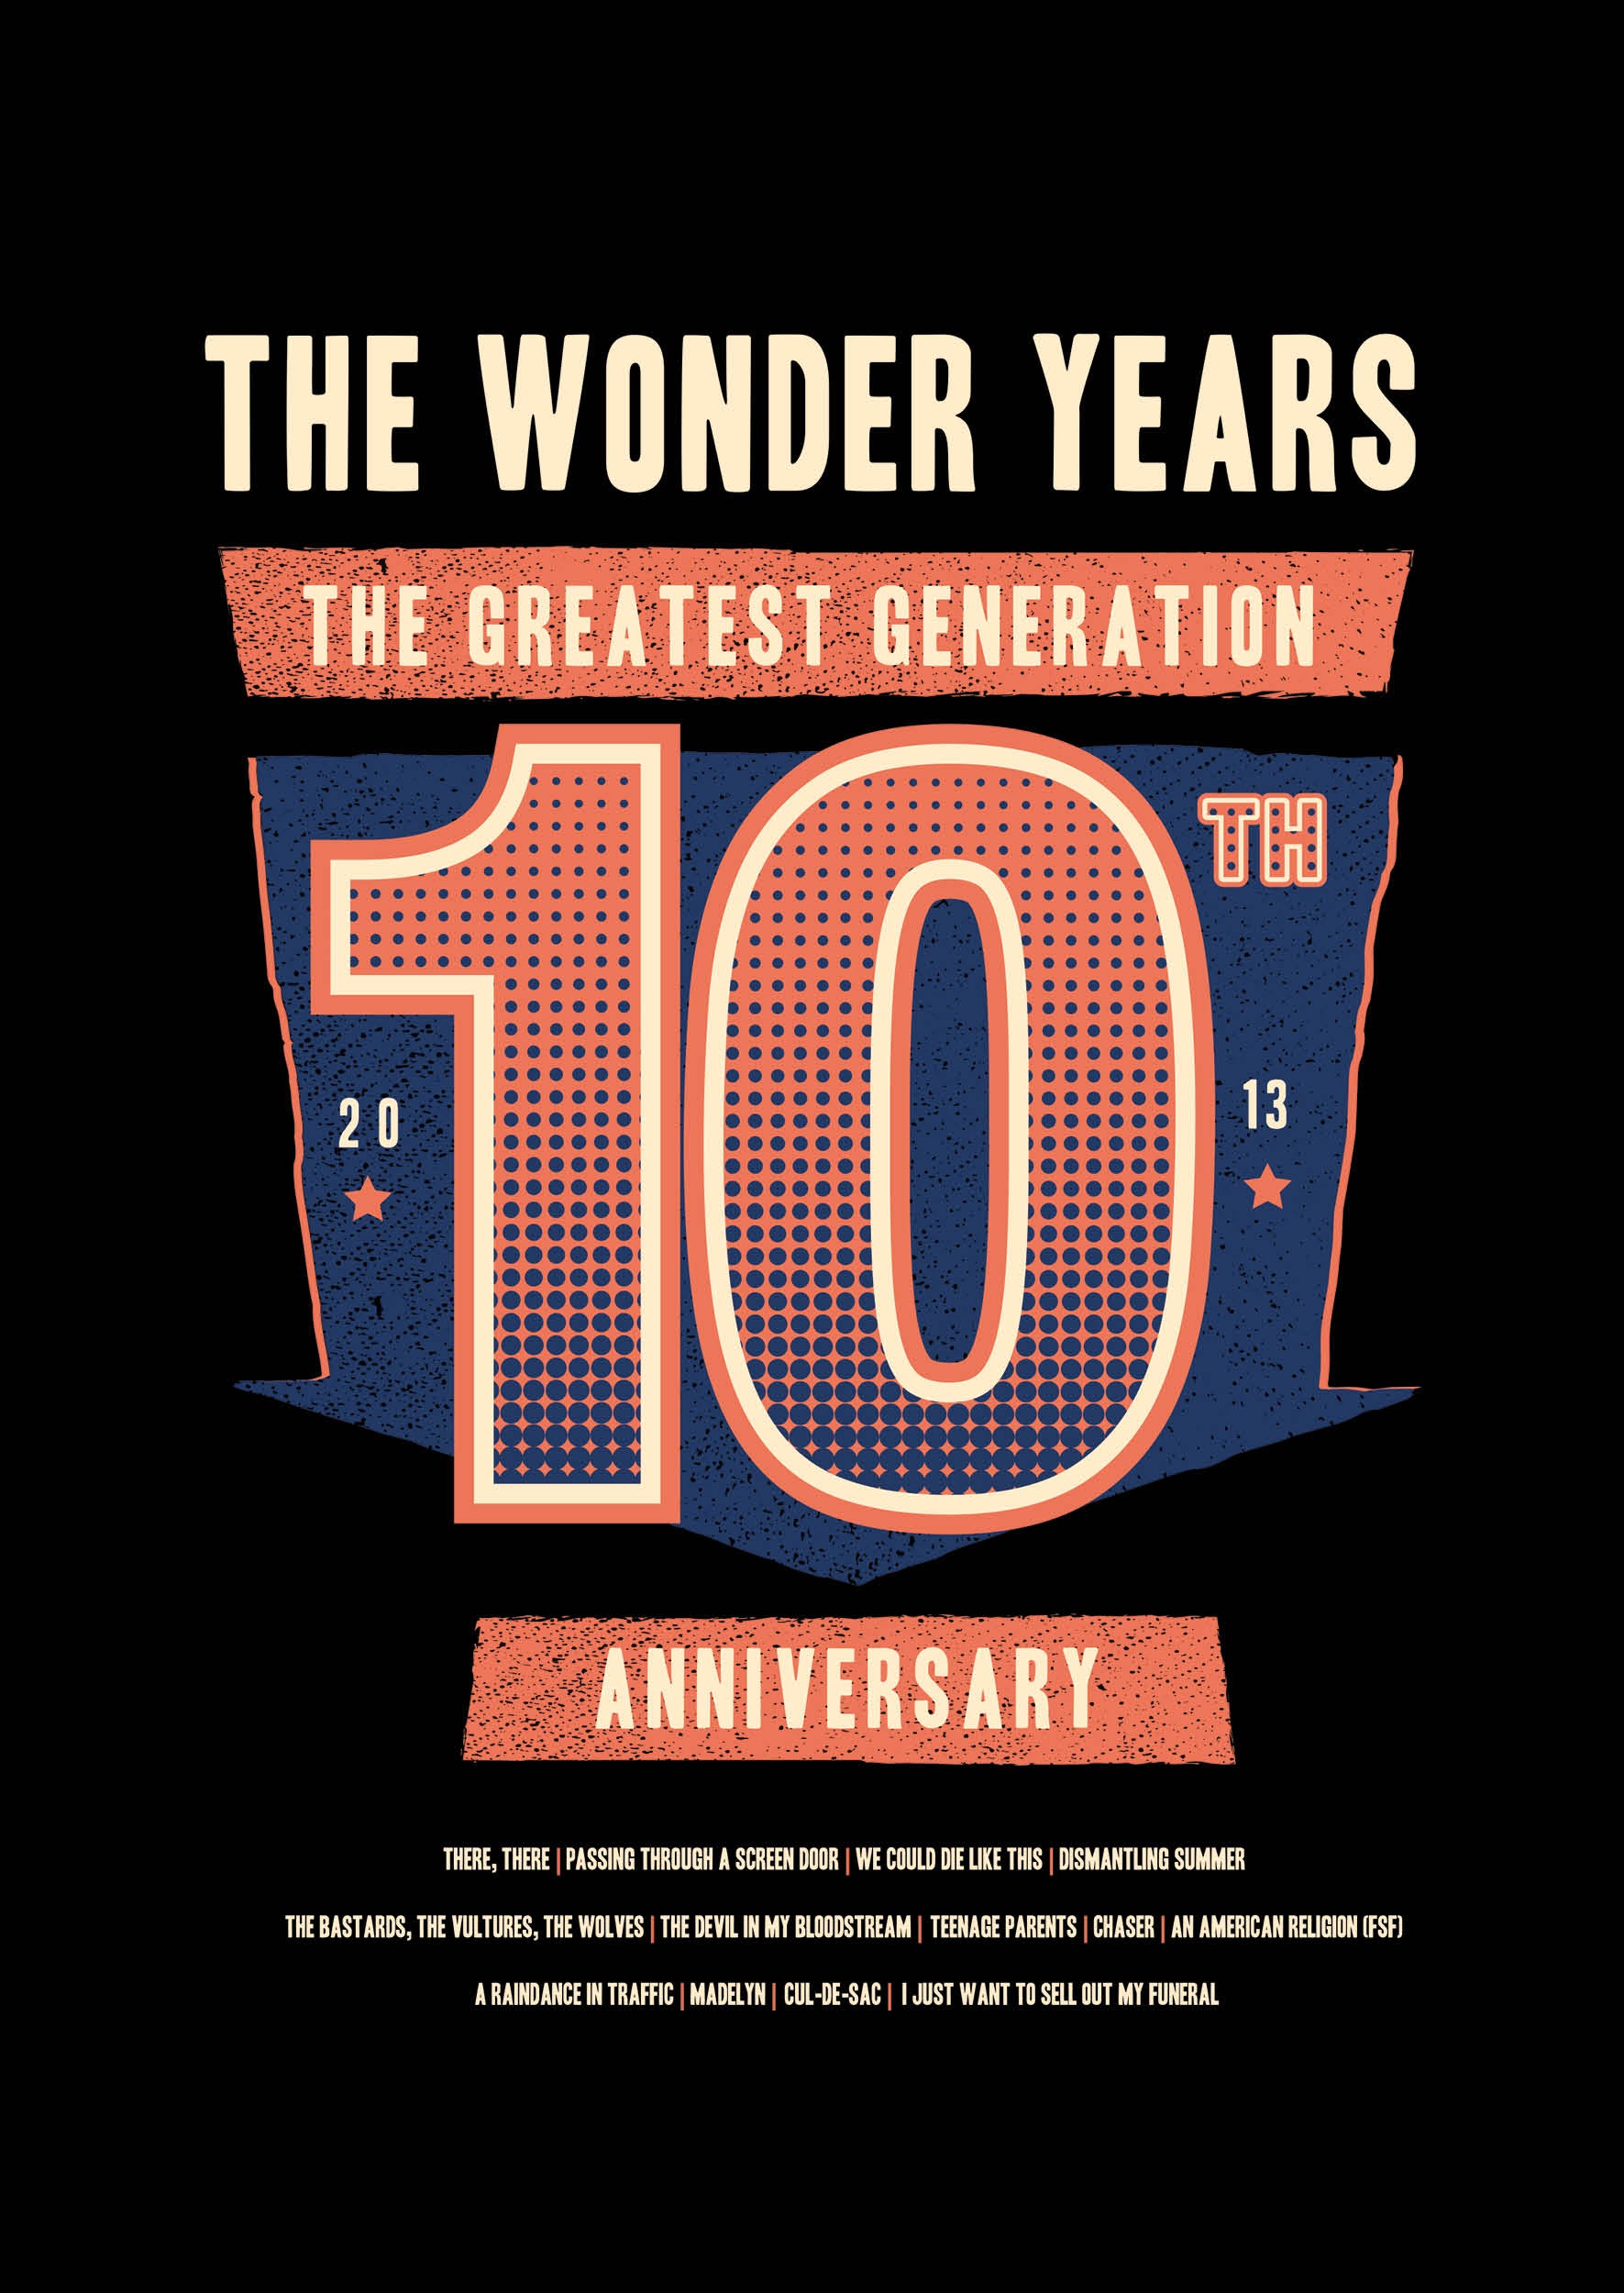 The Wonder Years x Rock Sound T-Shirt